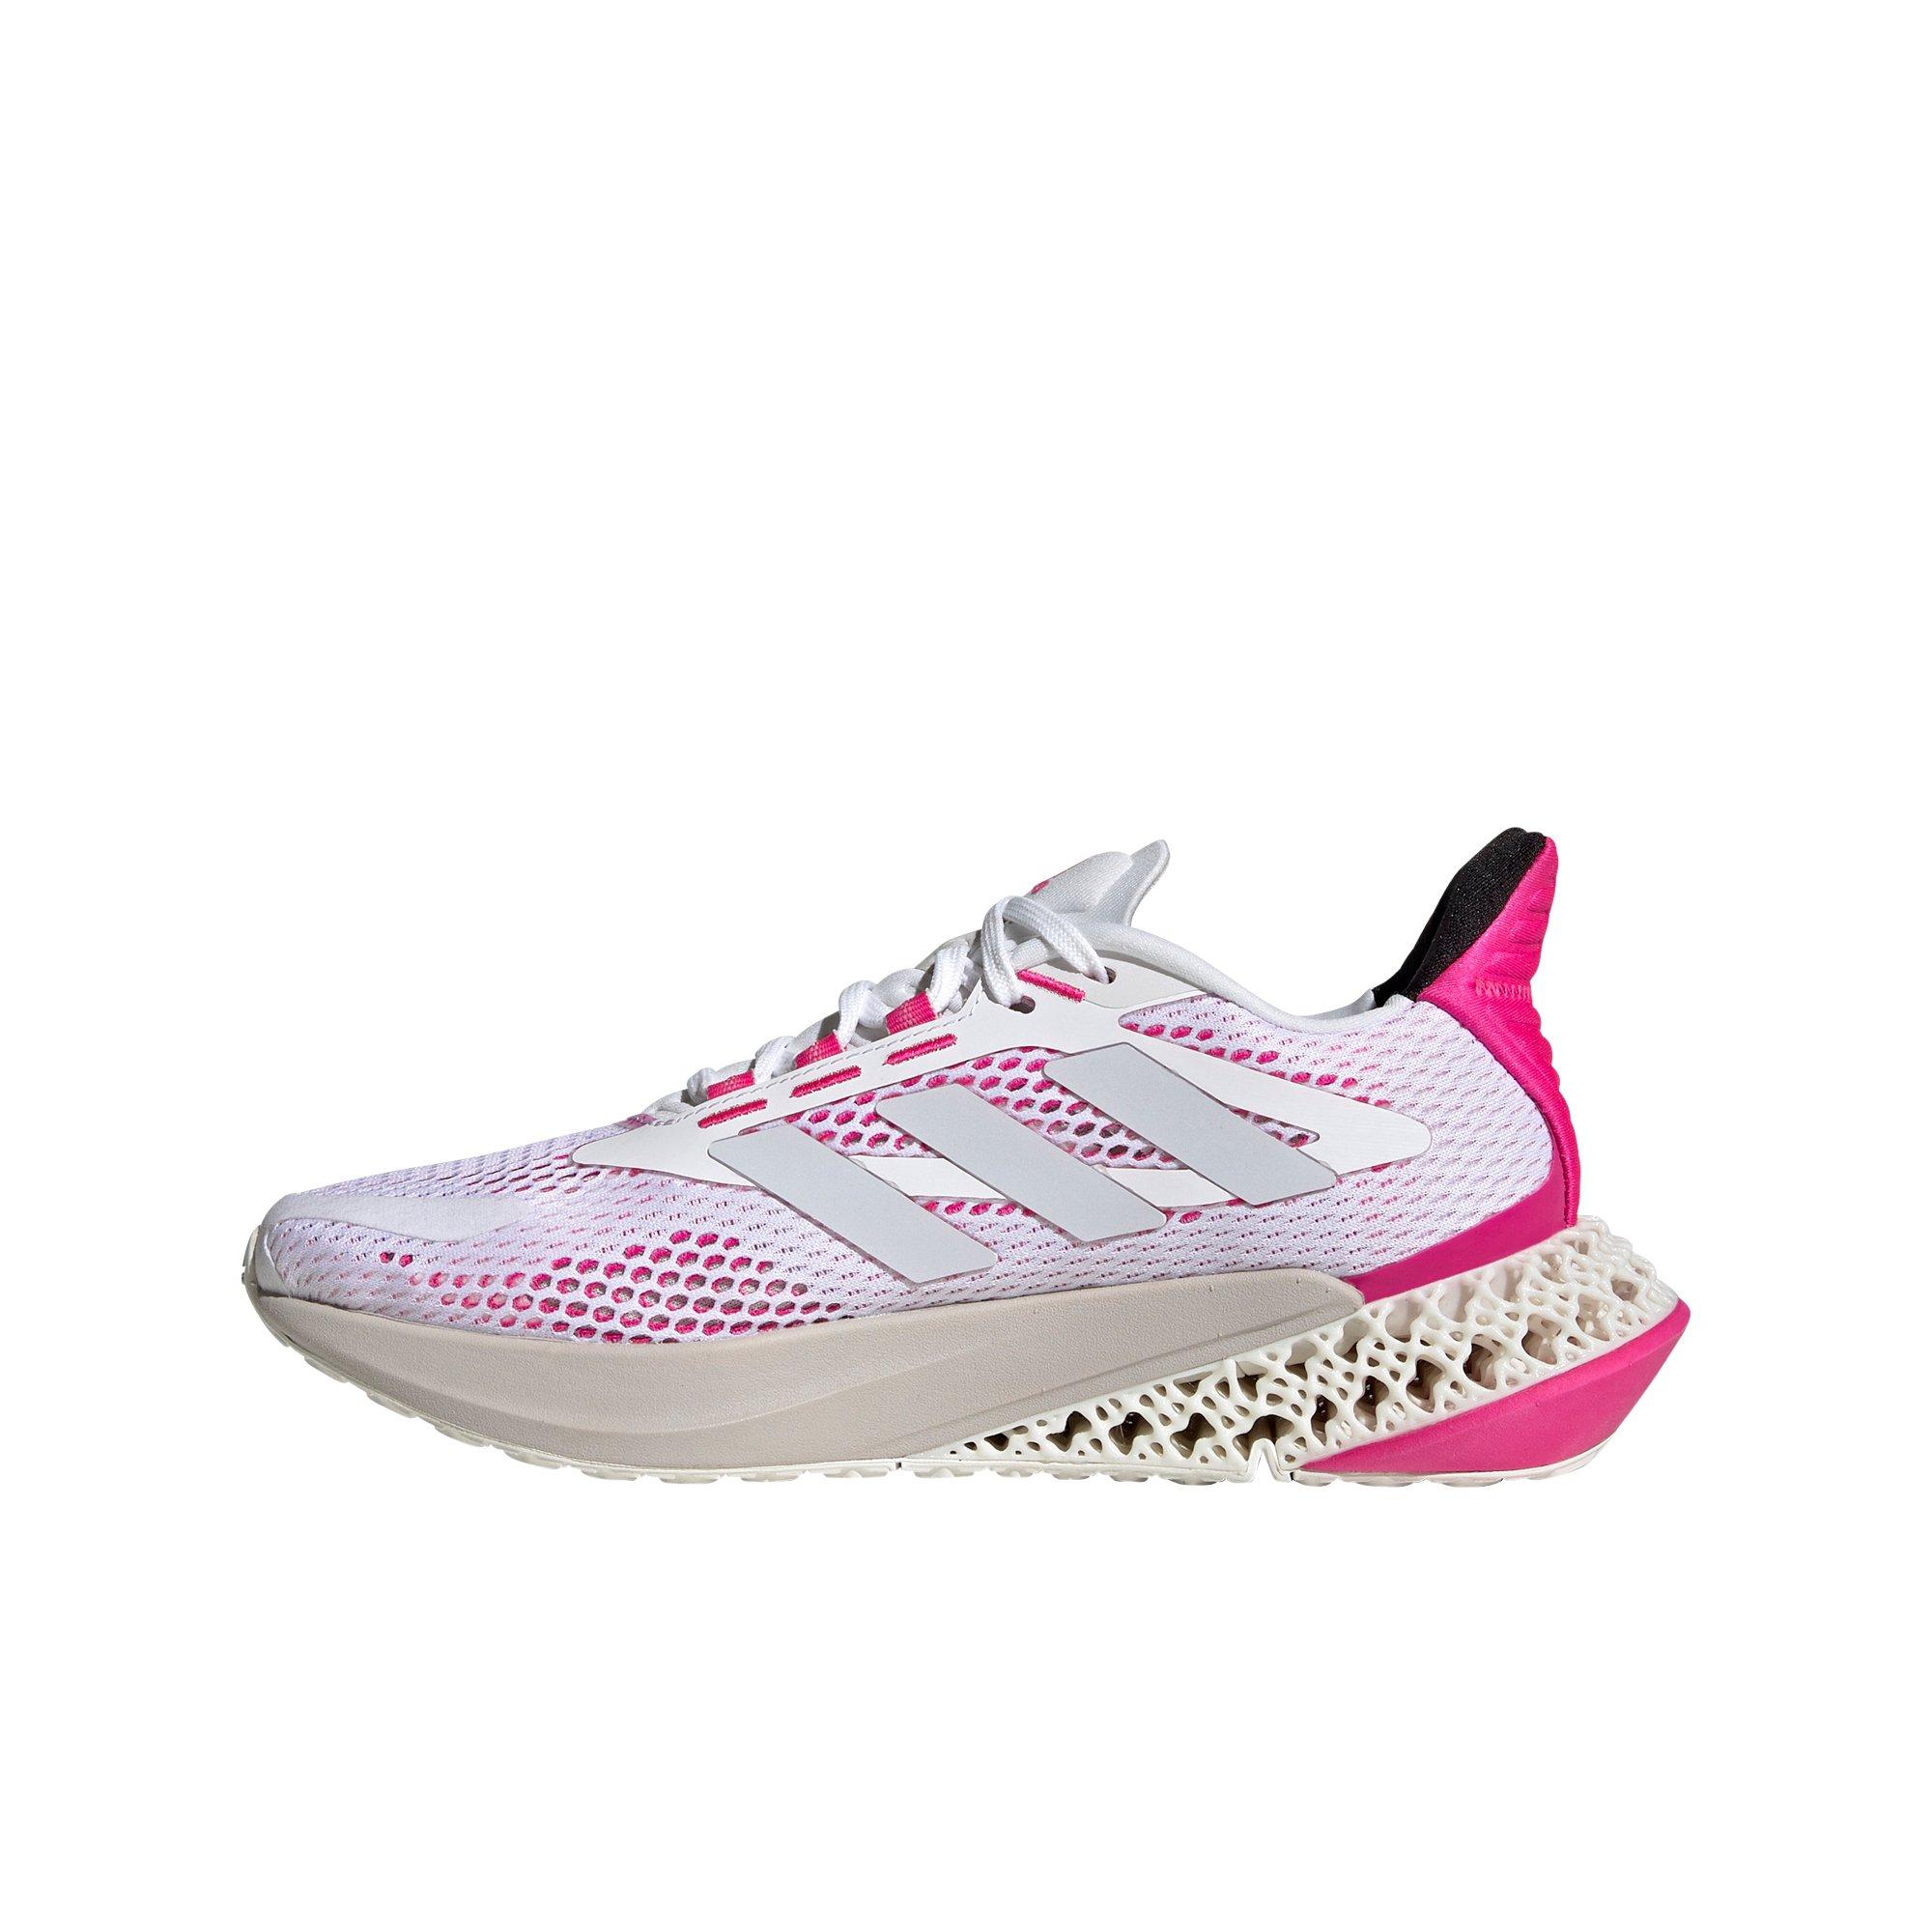 Finish Line Women Sport & Swimwear Sportswear Sports Shoes Running Womens 4D FWD Pulse Running Shoes in Pink/Wonder Mauve Size 5.5 Knit 